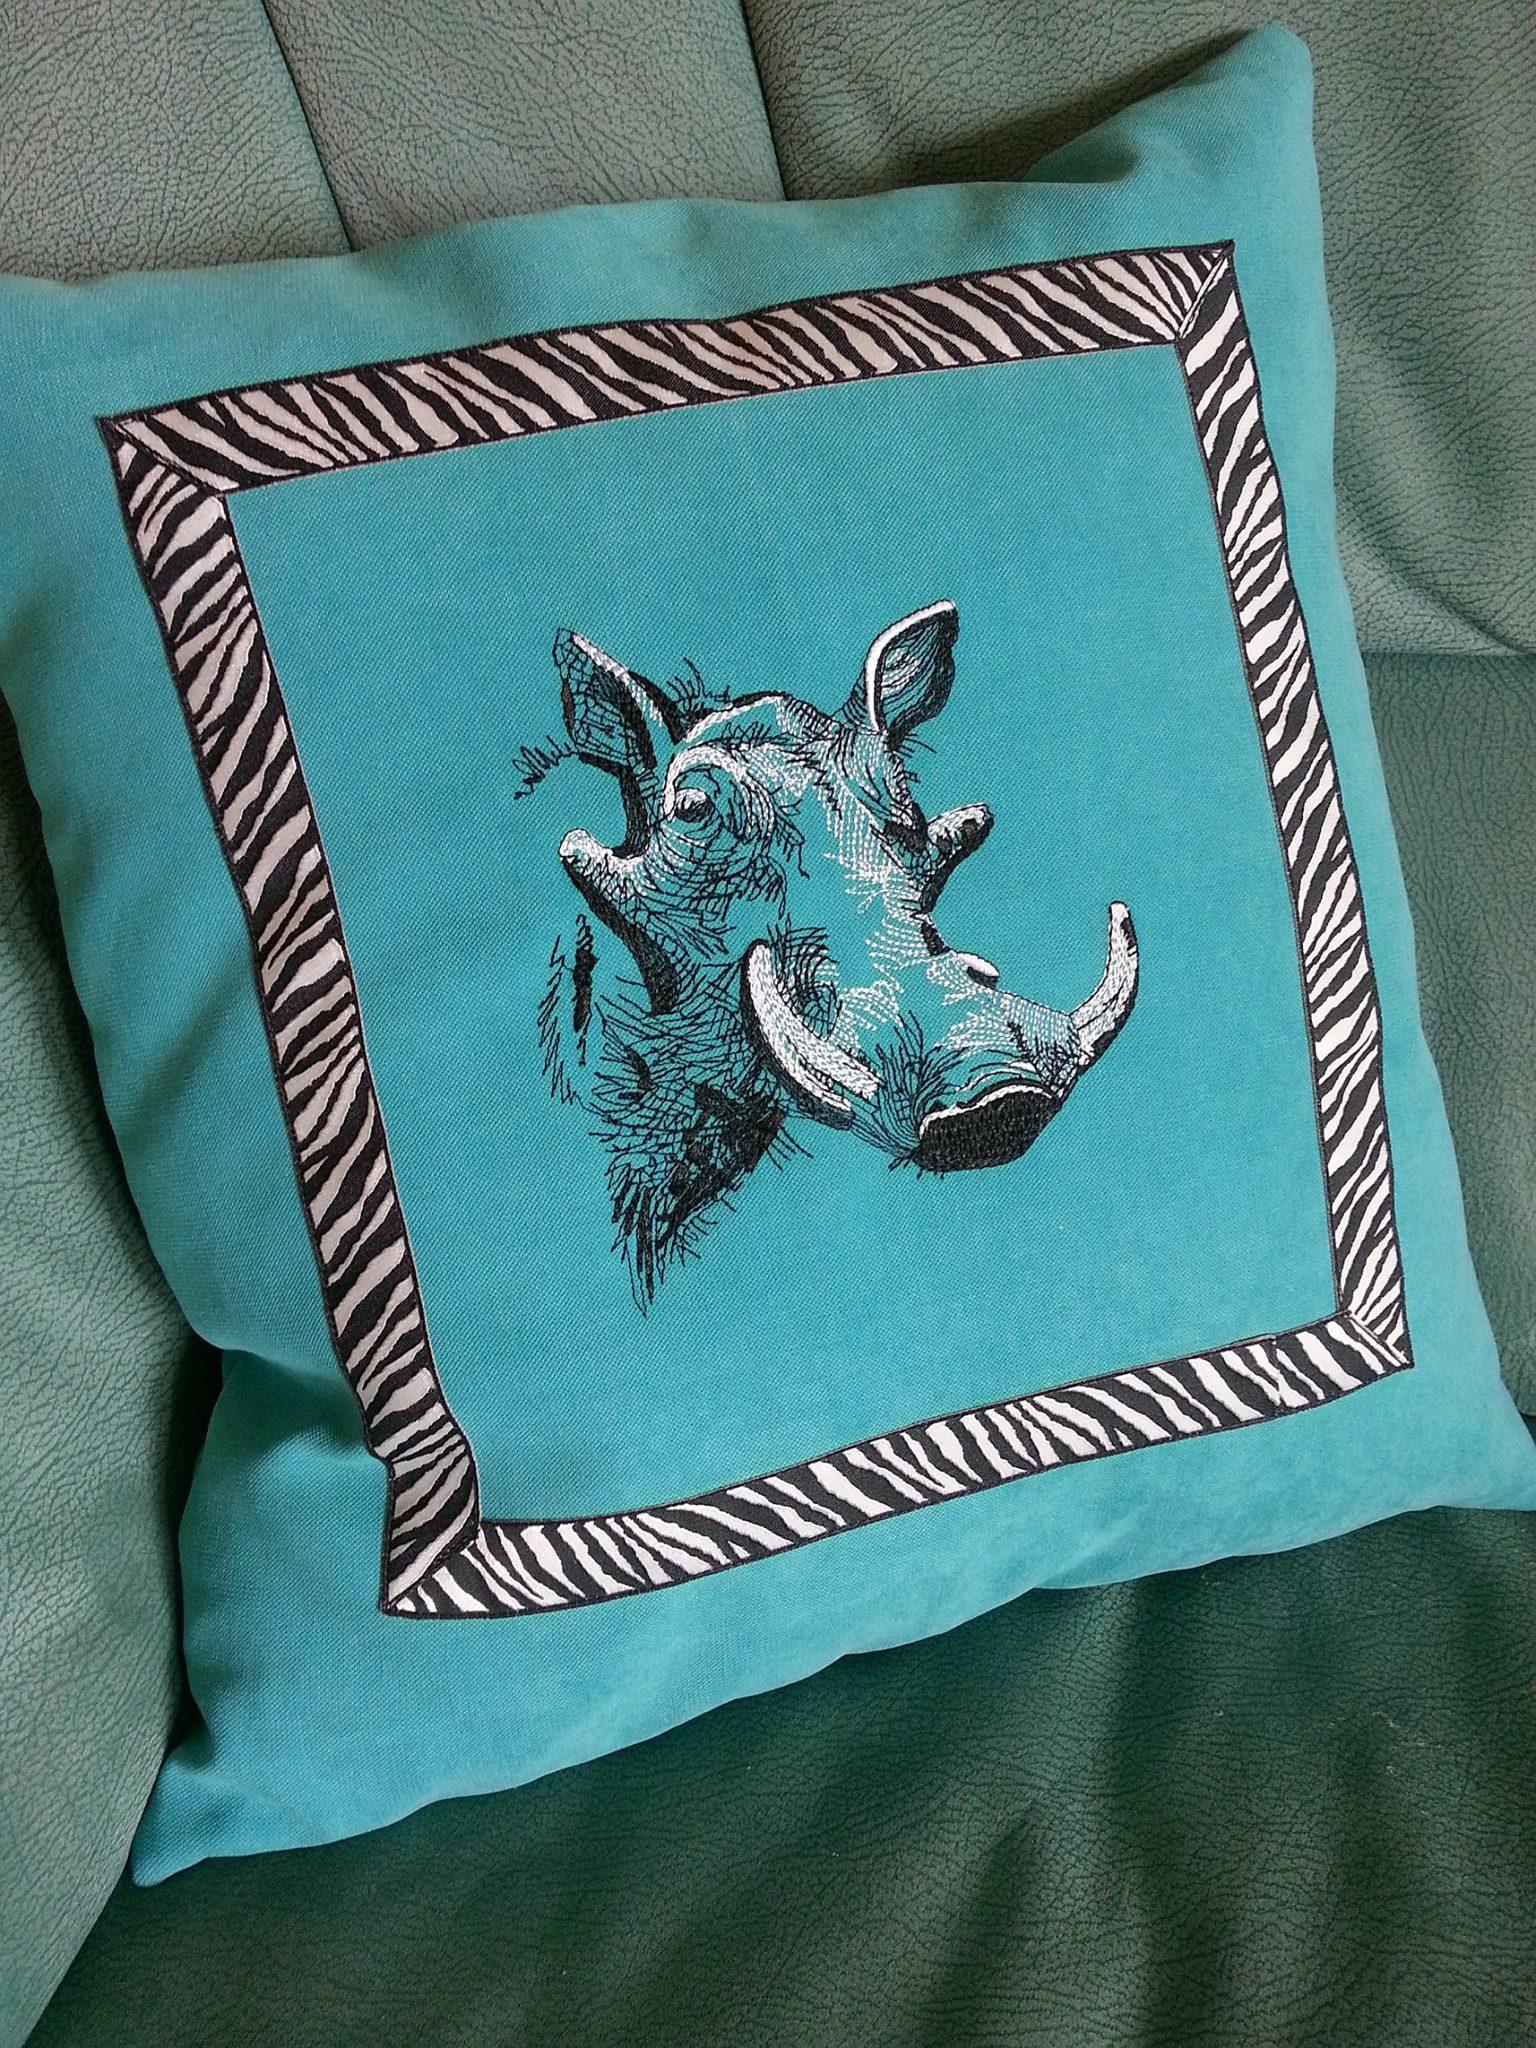 Cushion with rhino embroidery design